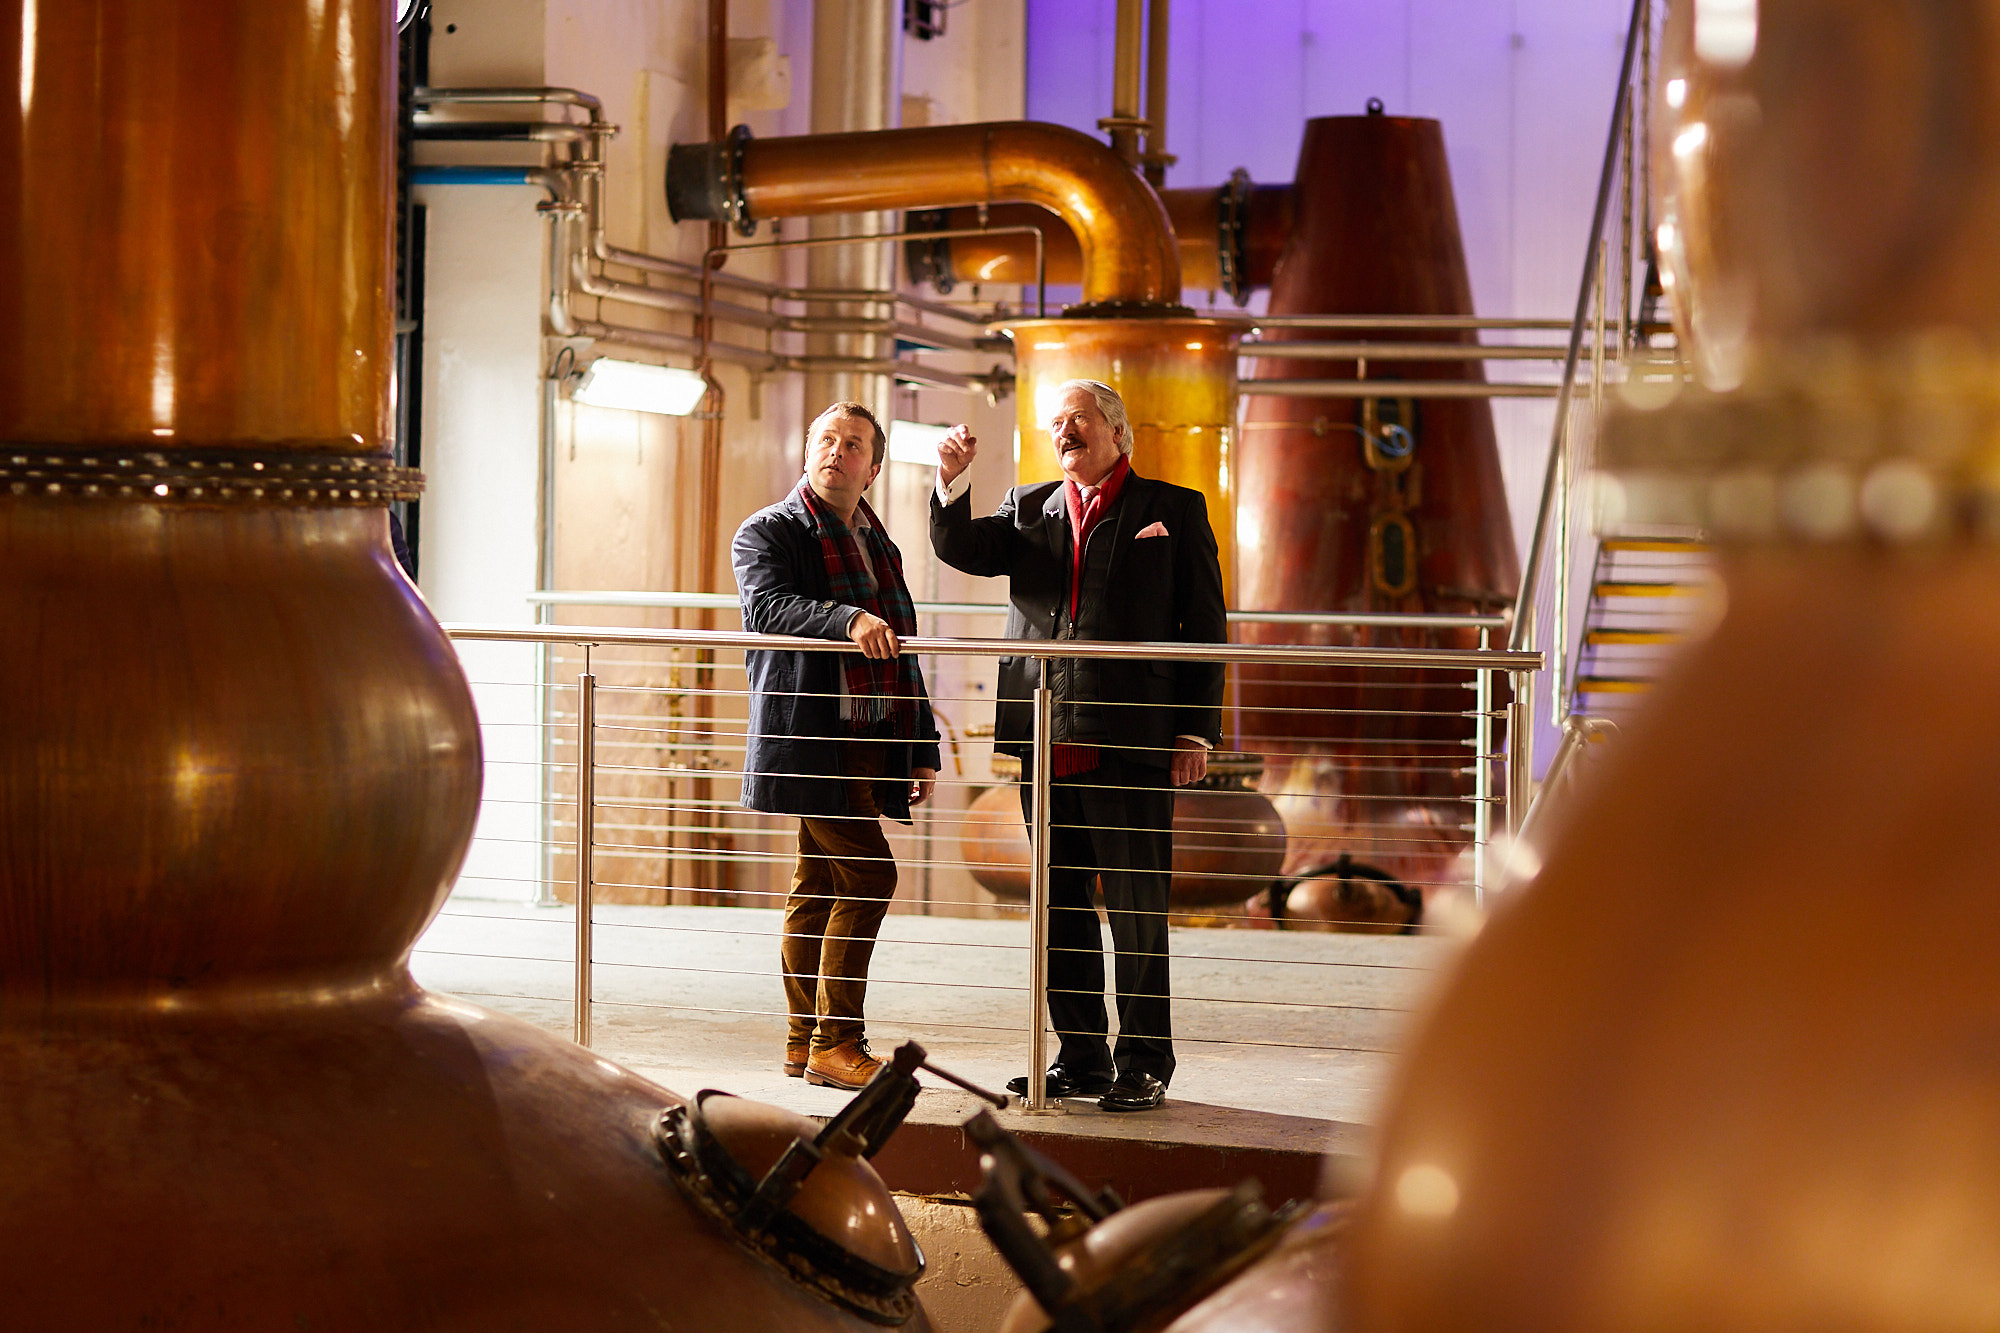 The Dalmore: The Art of Distillation